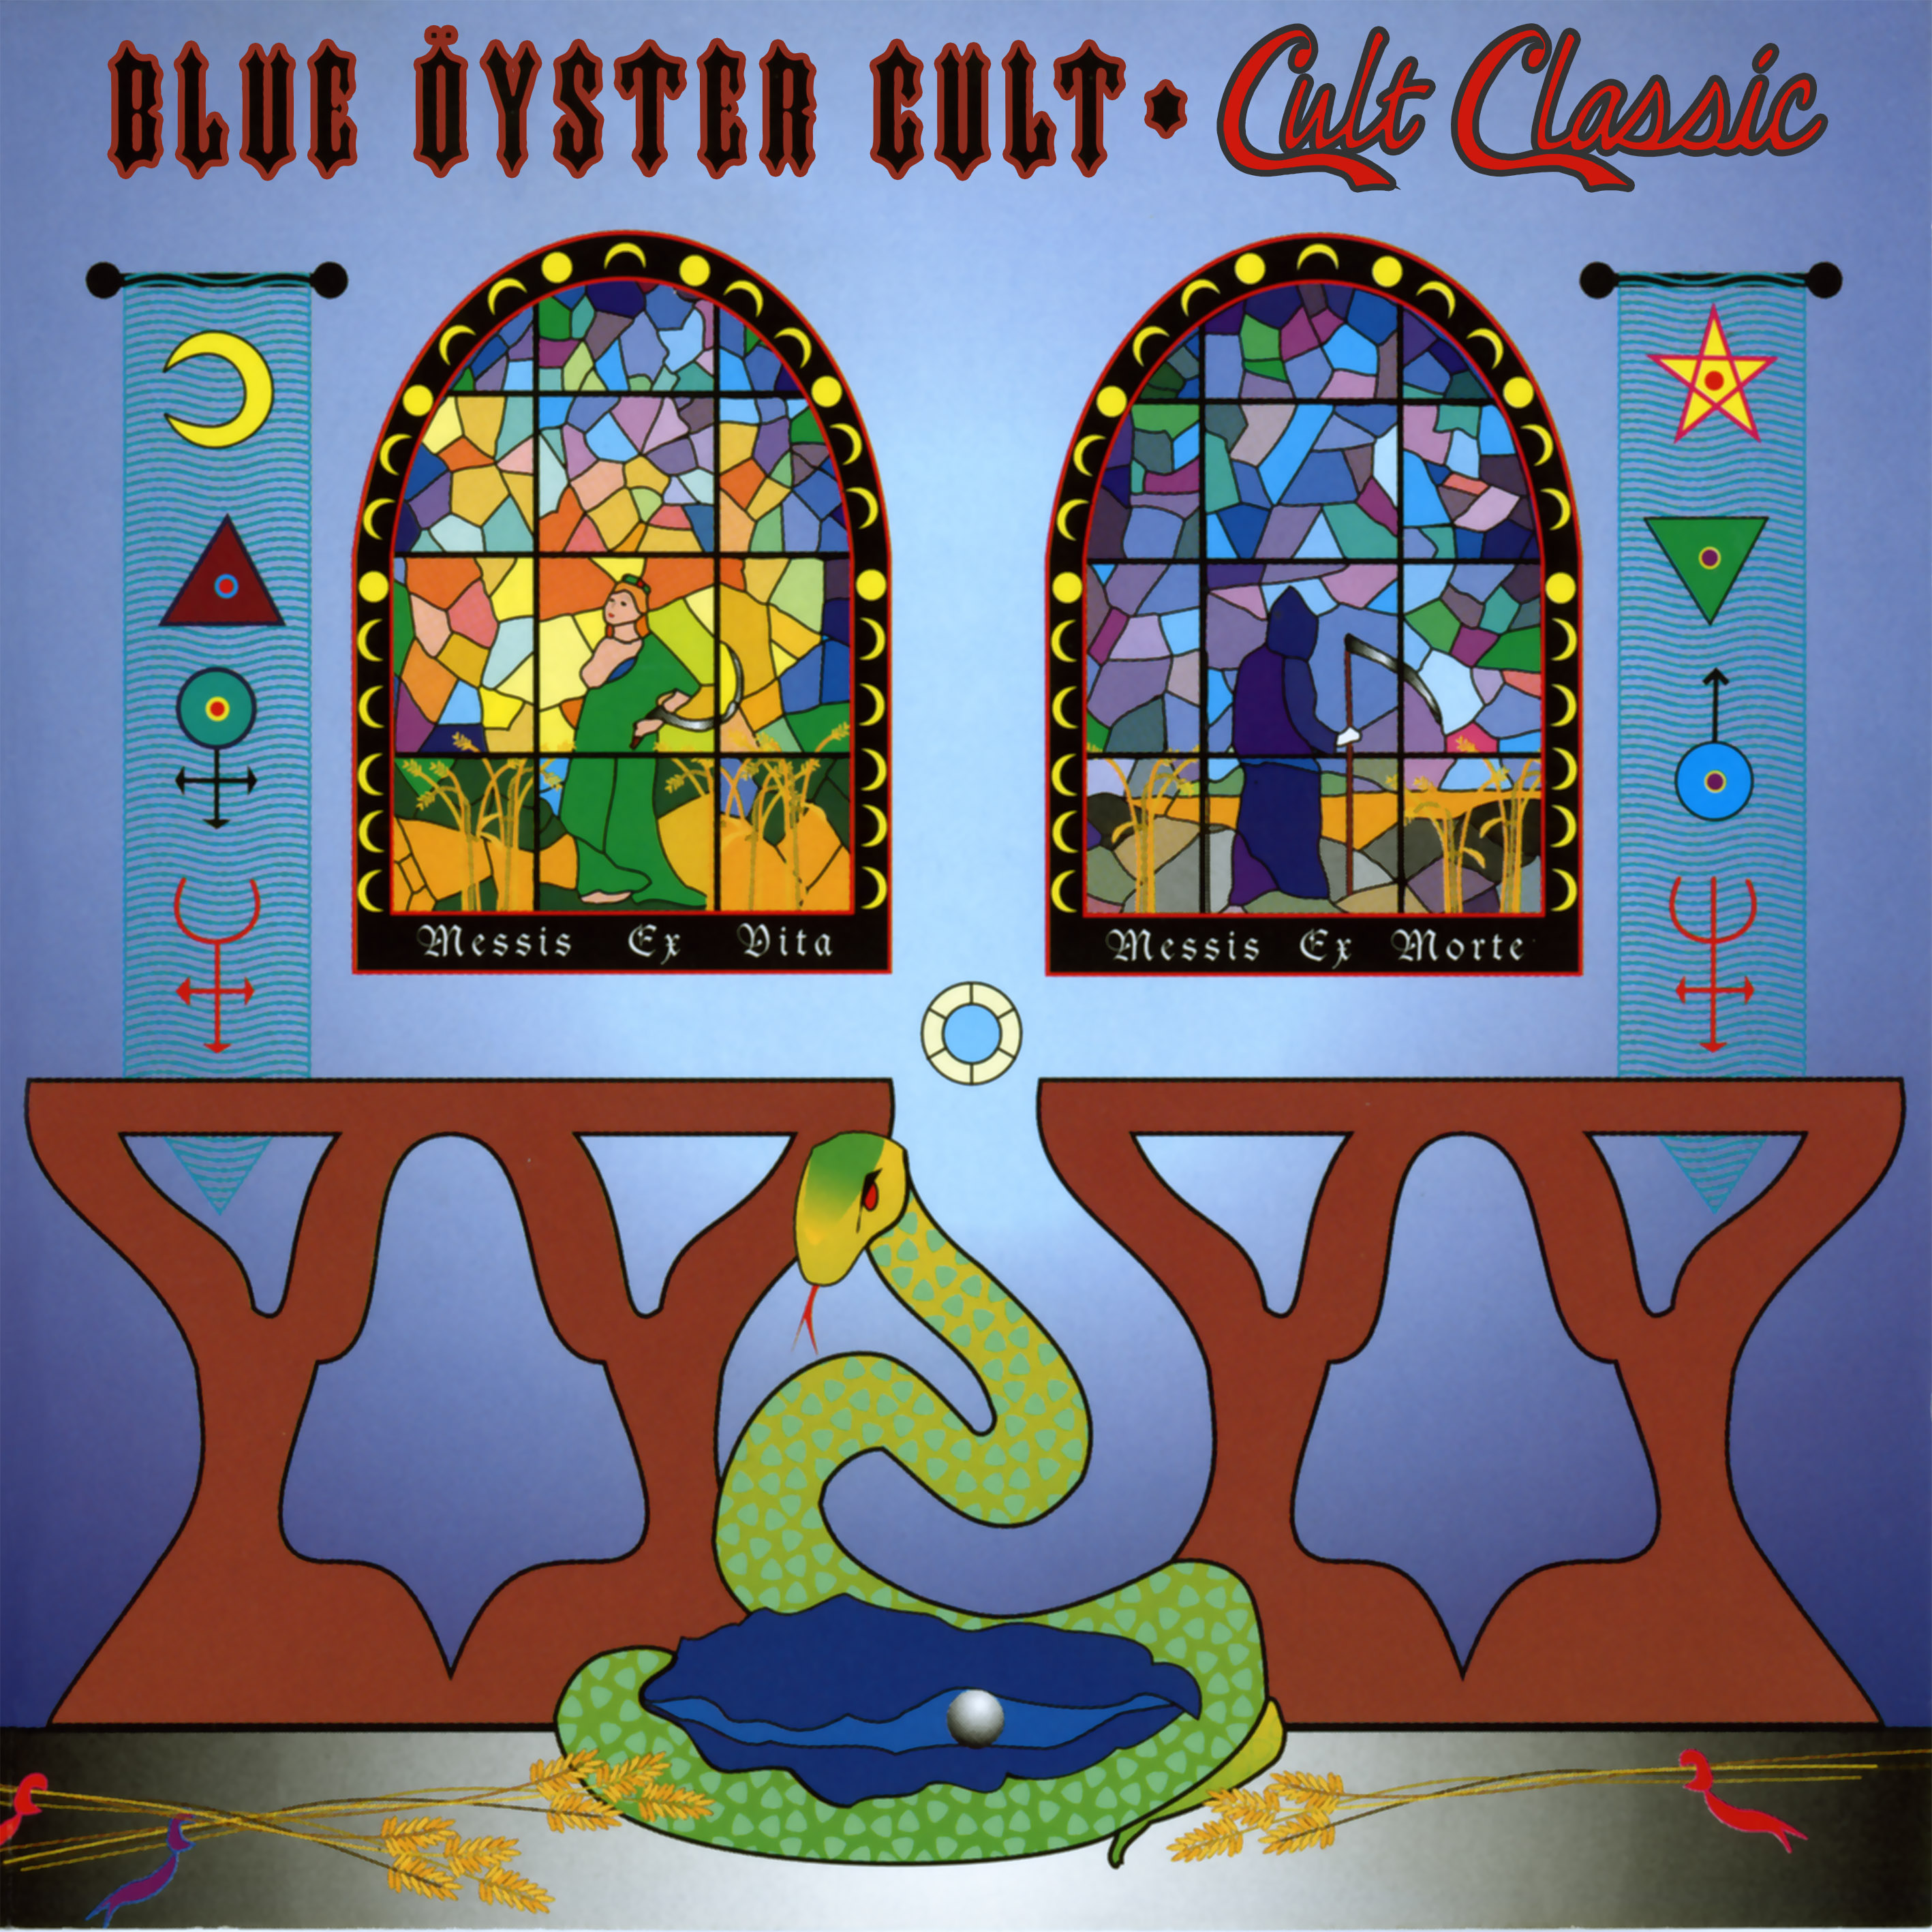 Blue Öyster Cult (USA) – Cult Classic